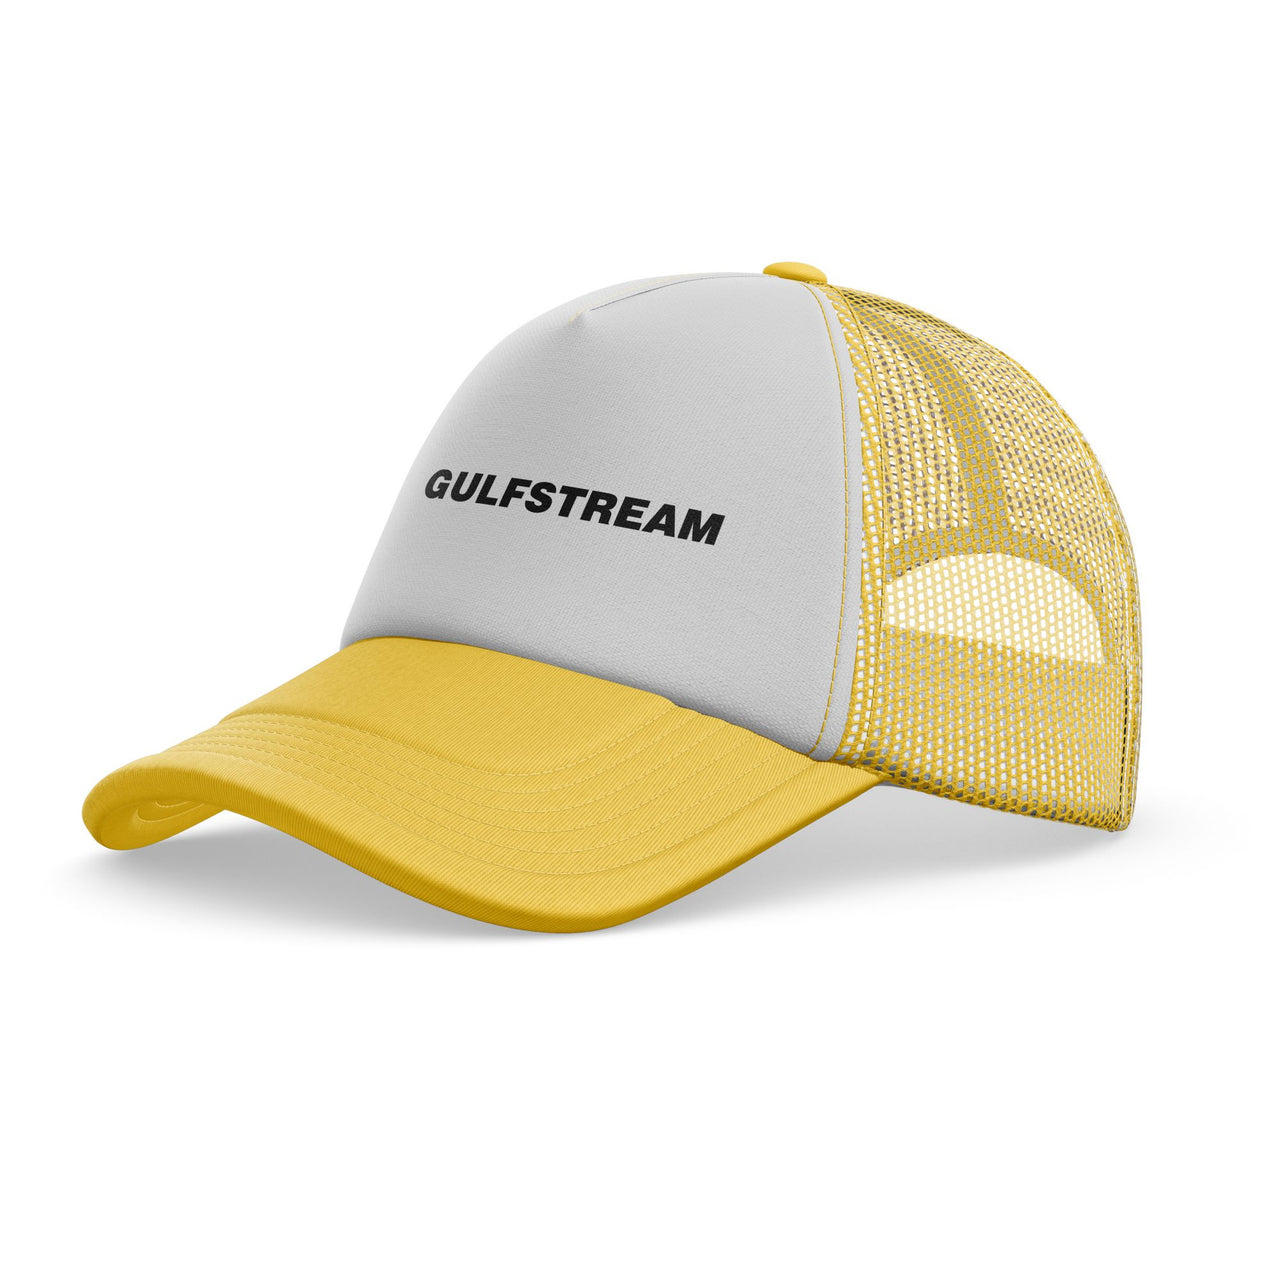 Gulfstream & Text Designed Trucker Caps & Hats